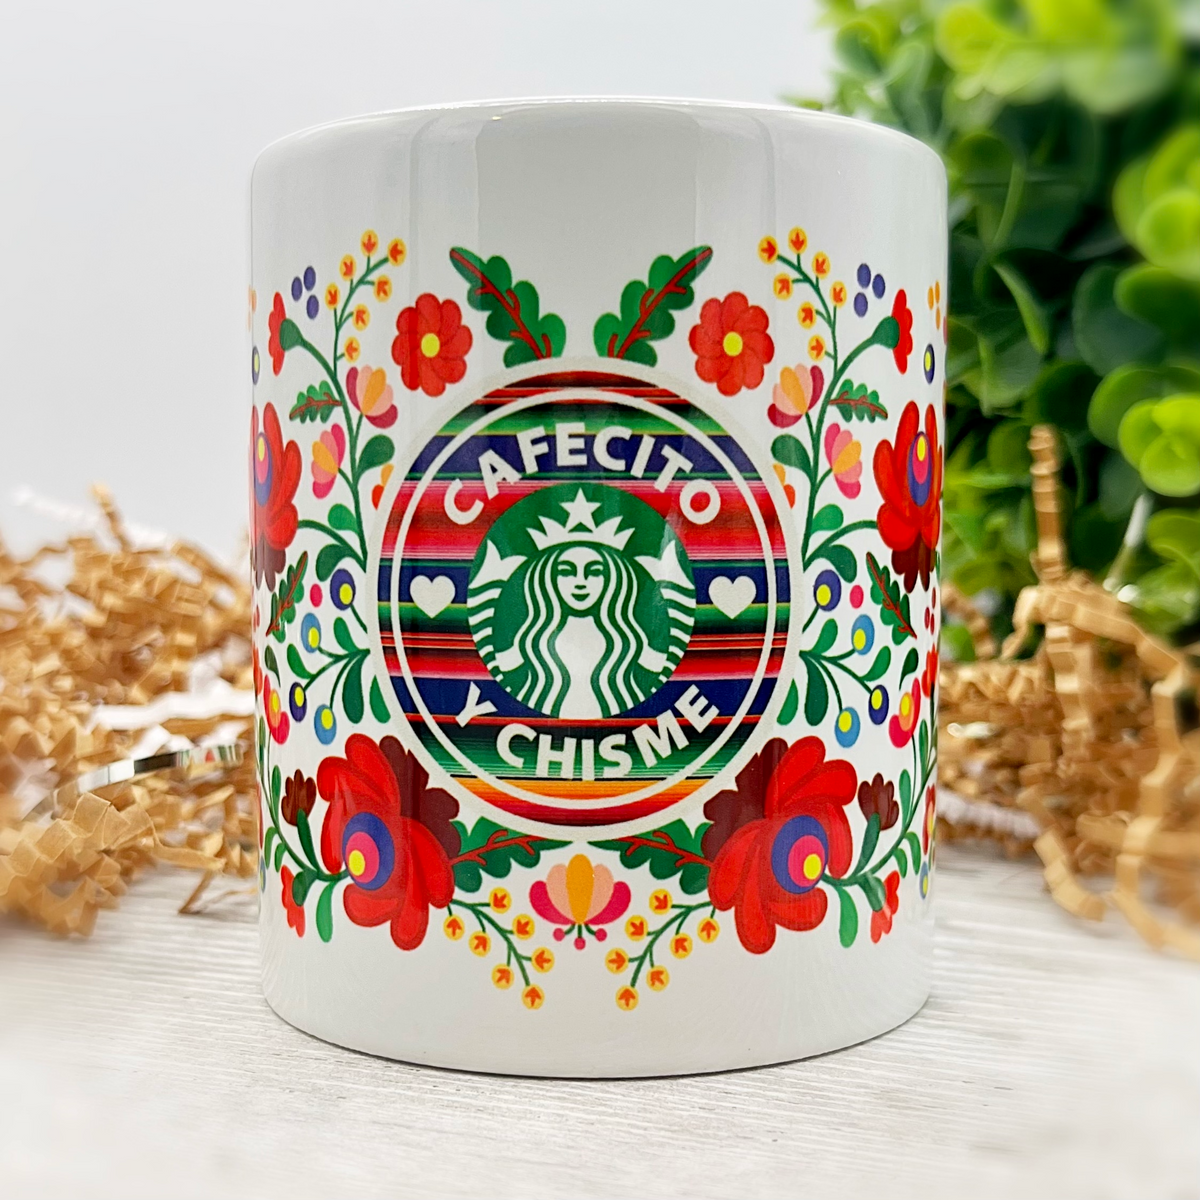 Cafecito Y Chisme Full Wrap 11oz Mug Starbucks Gift Best Friend